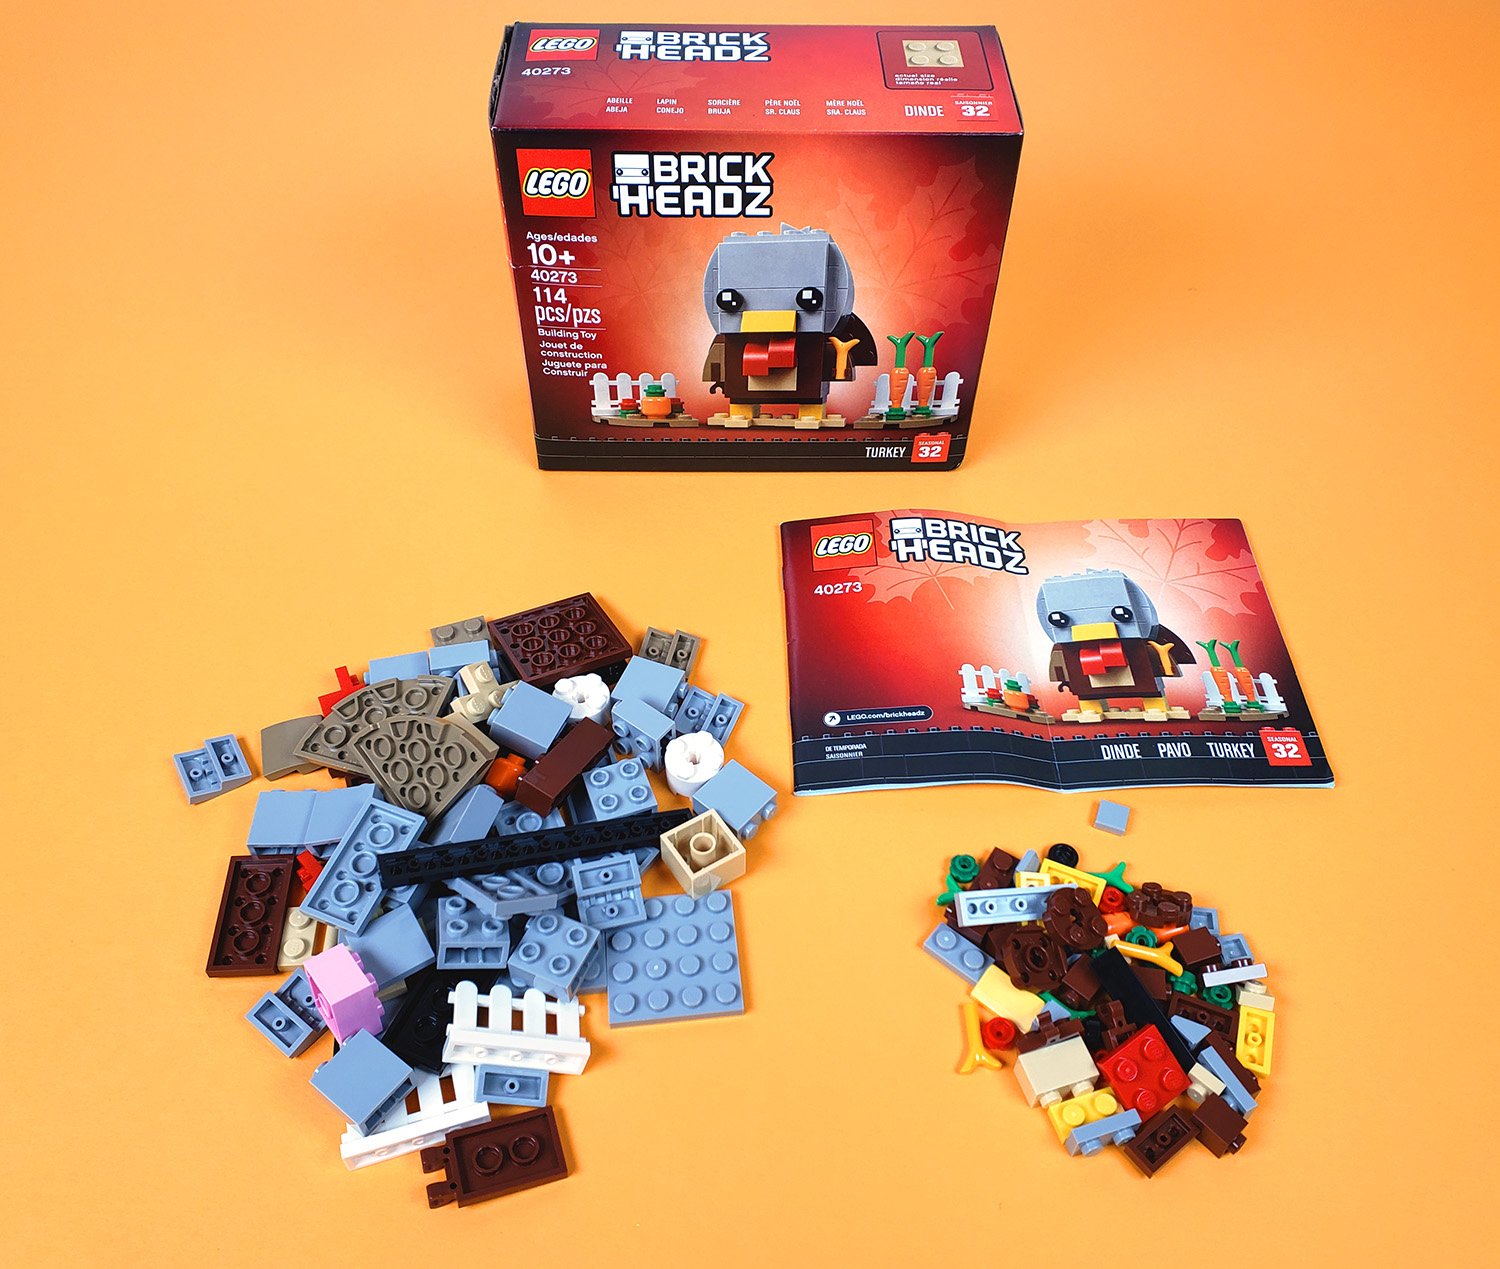 lego brickheadz pieces and box